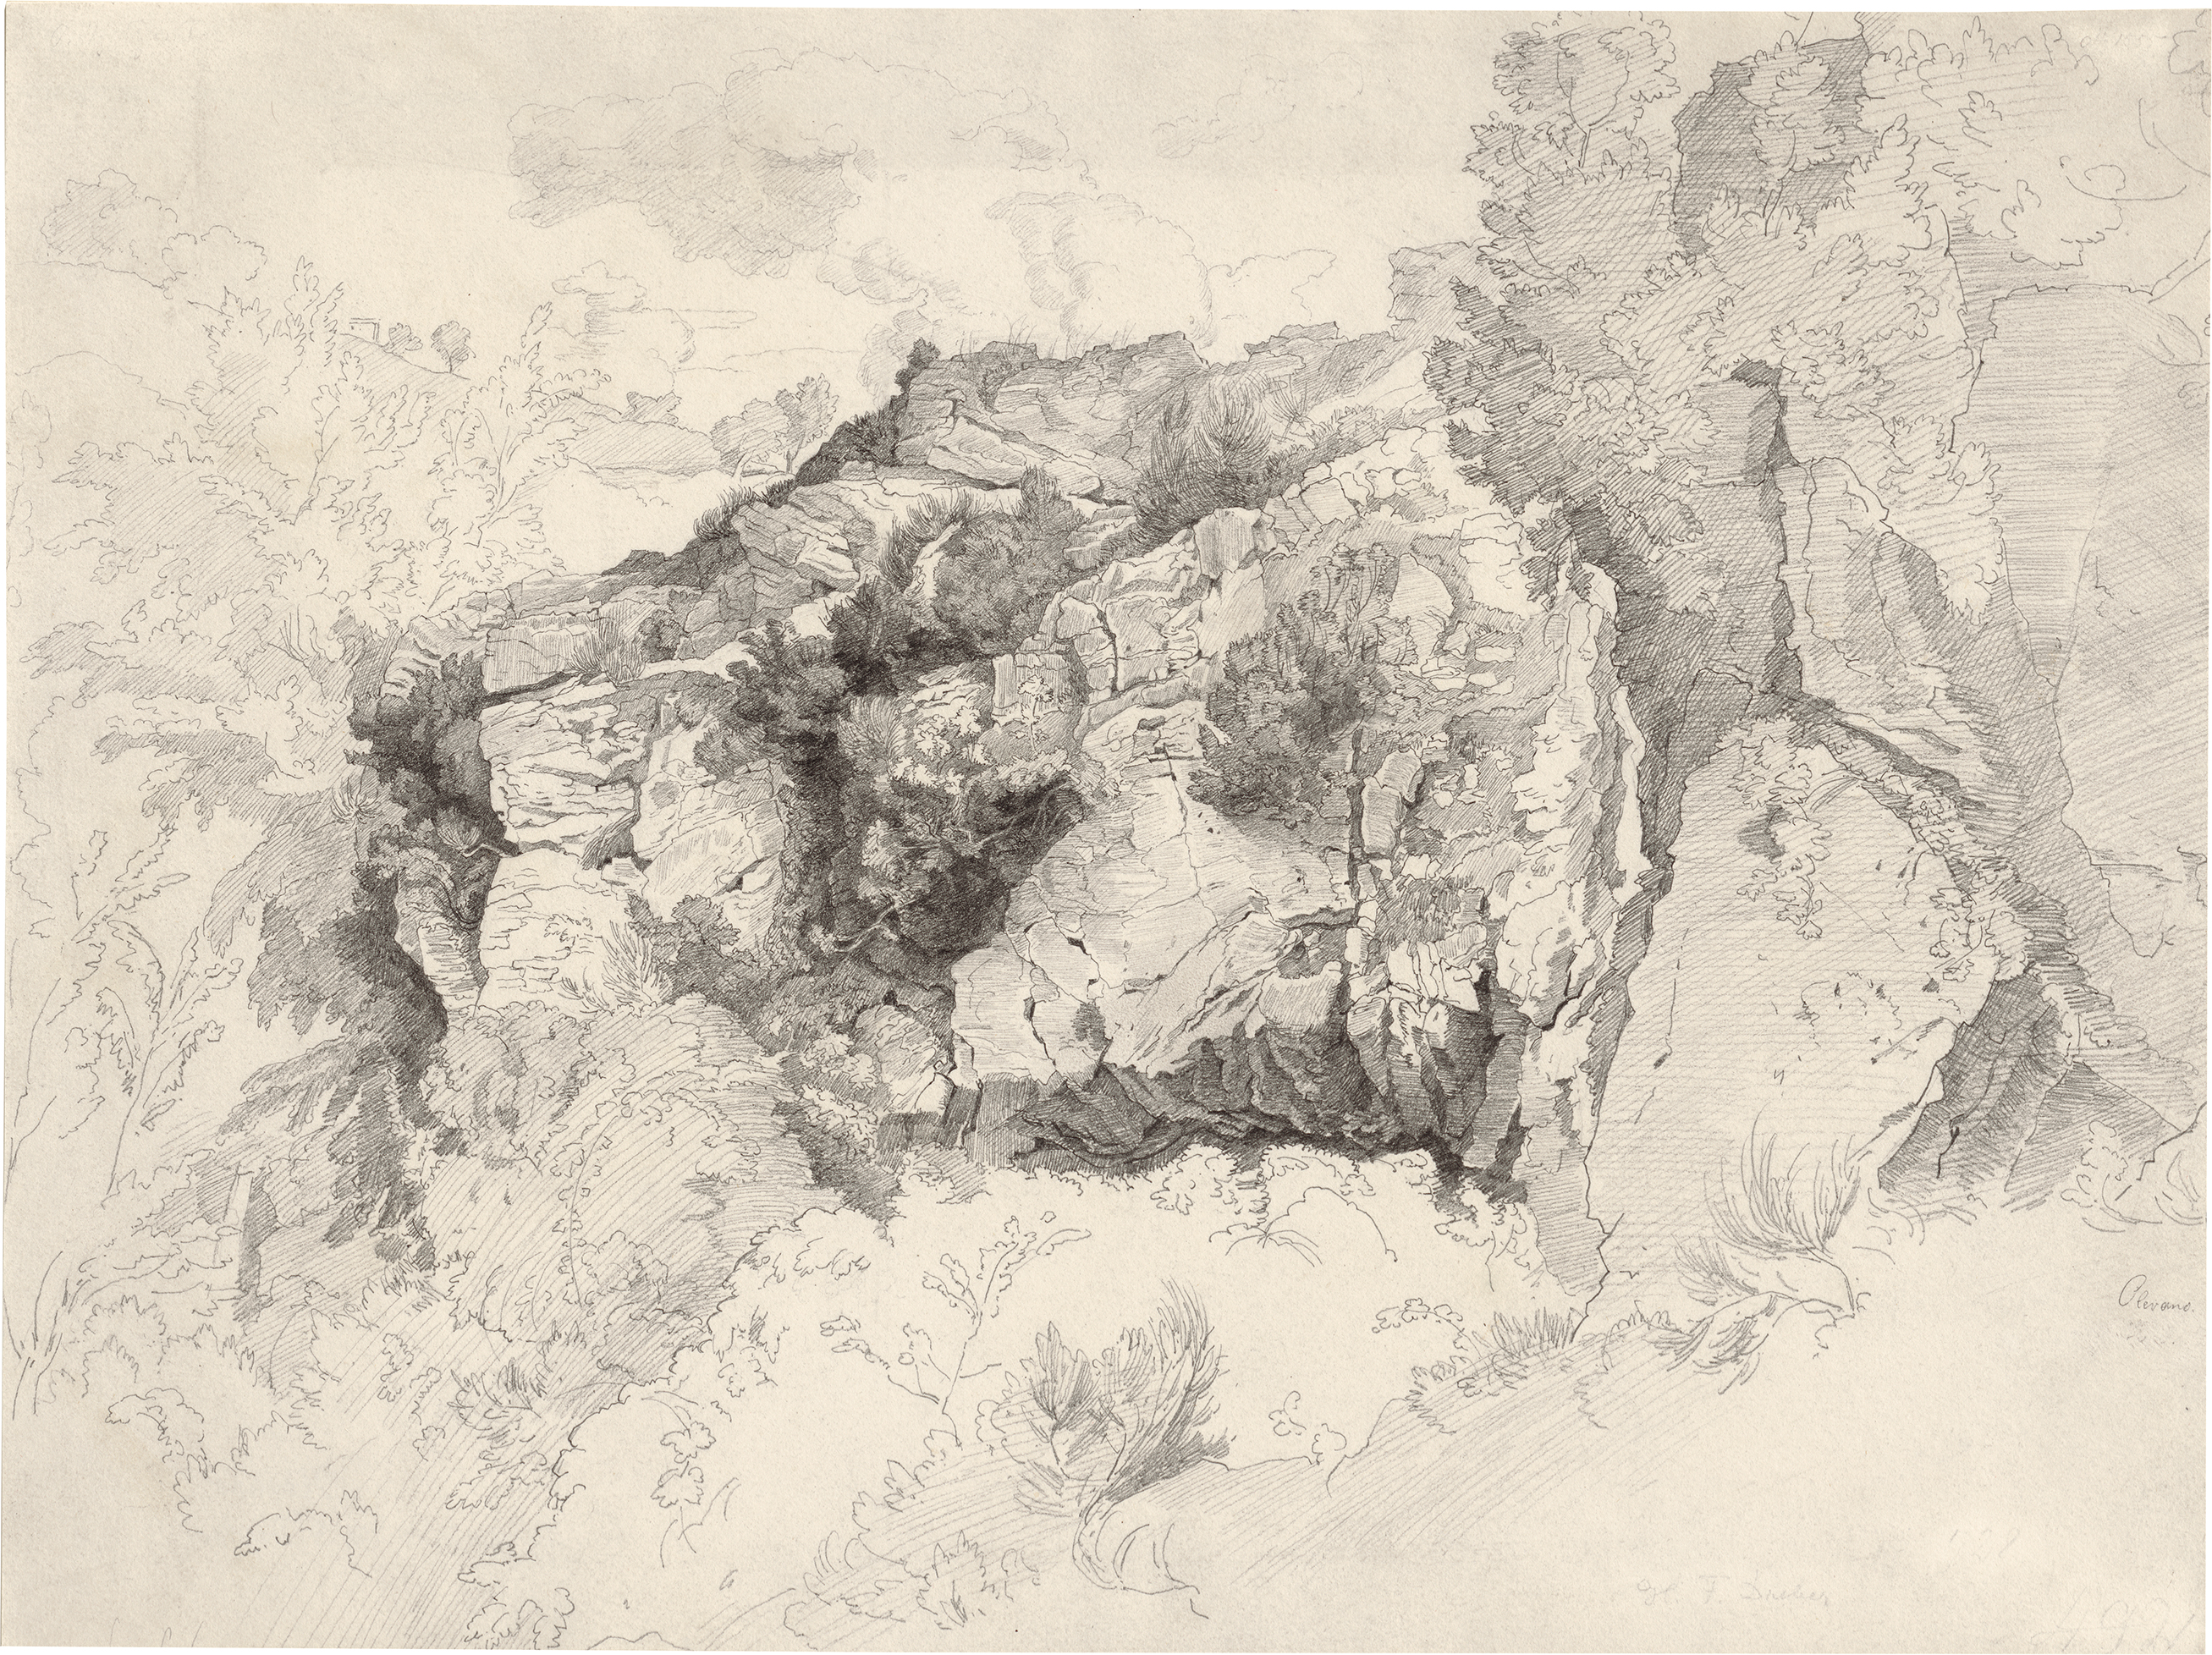 32_Dreber_drawing Layers of Rock near Olevano